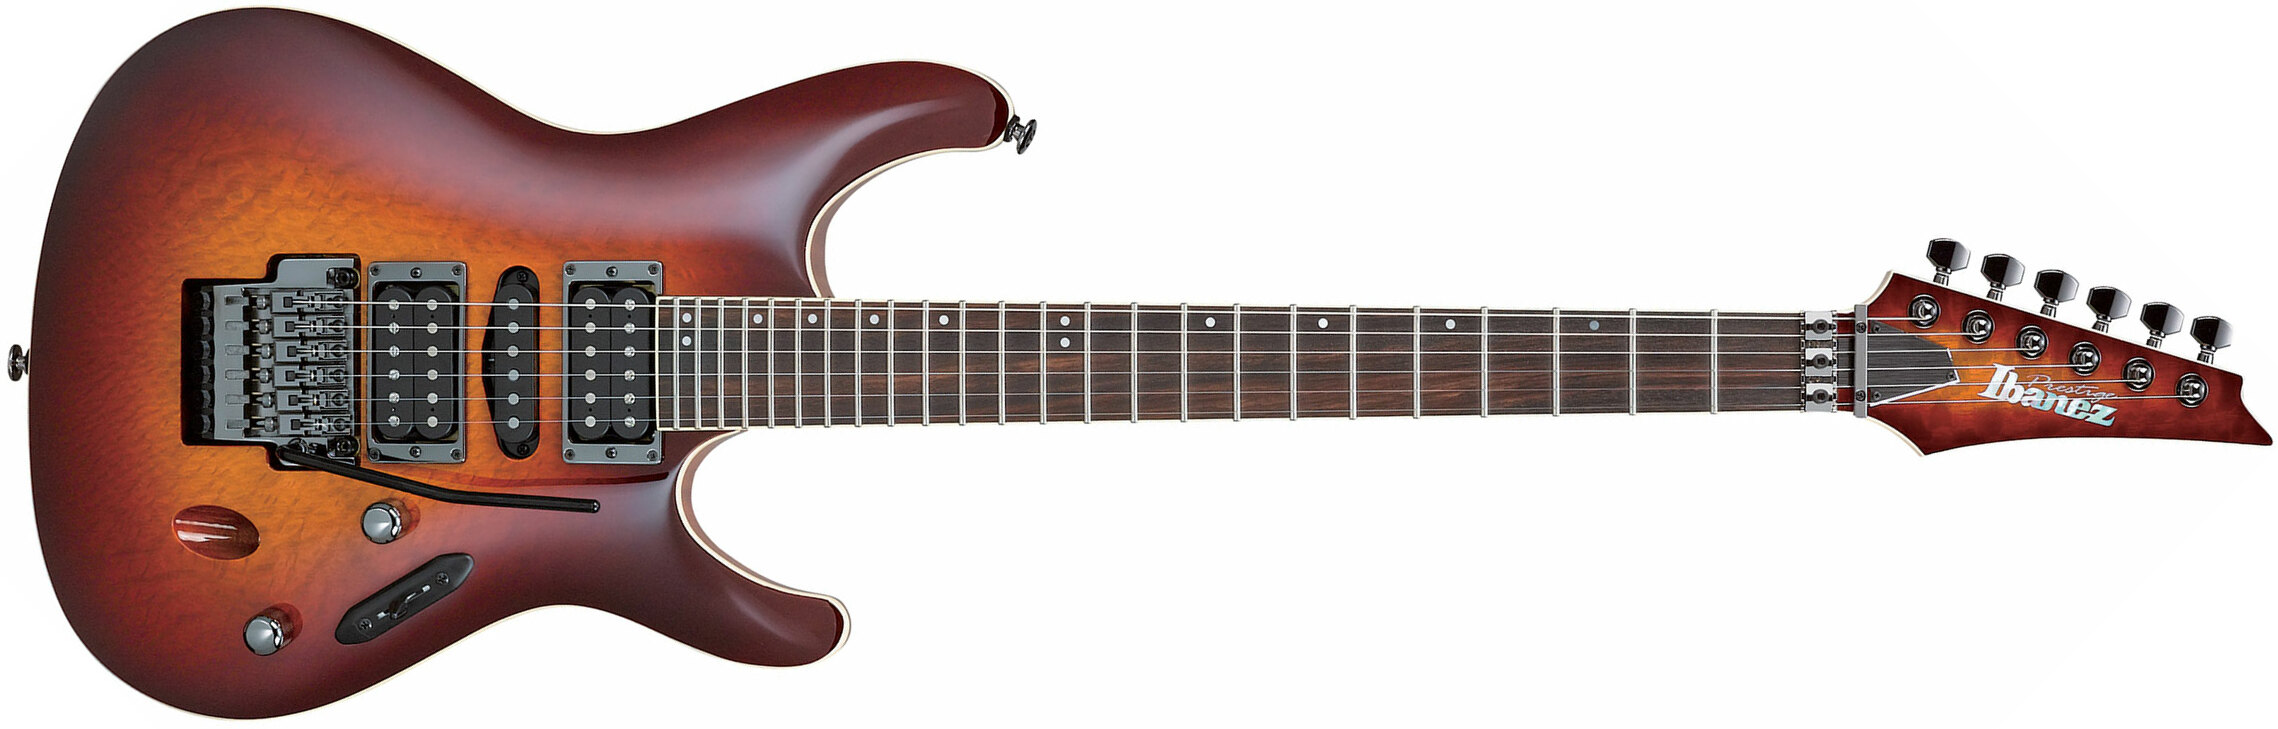 Ibanez S6570sk Stb Prestige Japon Hsh Rweb - Sunset Burst - Str shape electric guitar - Main picture